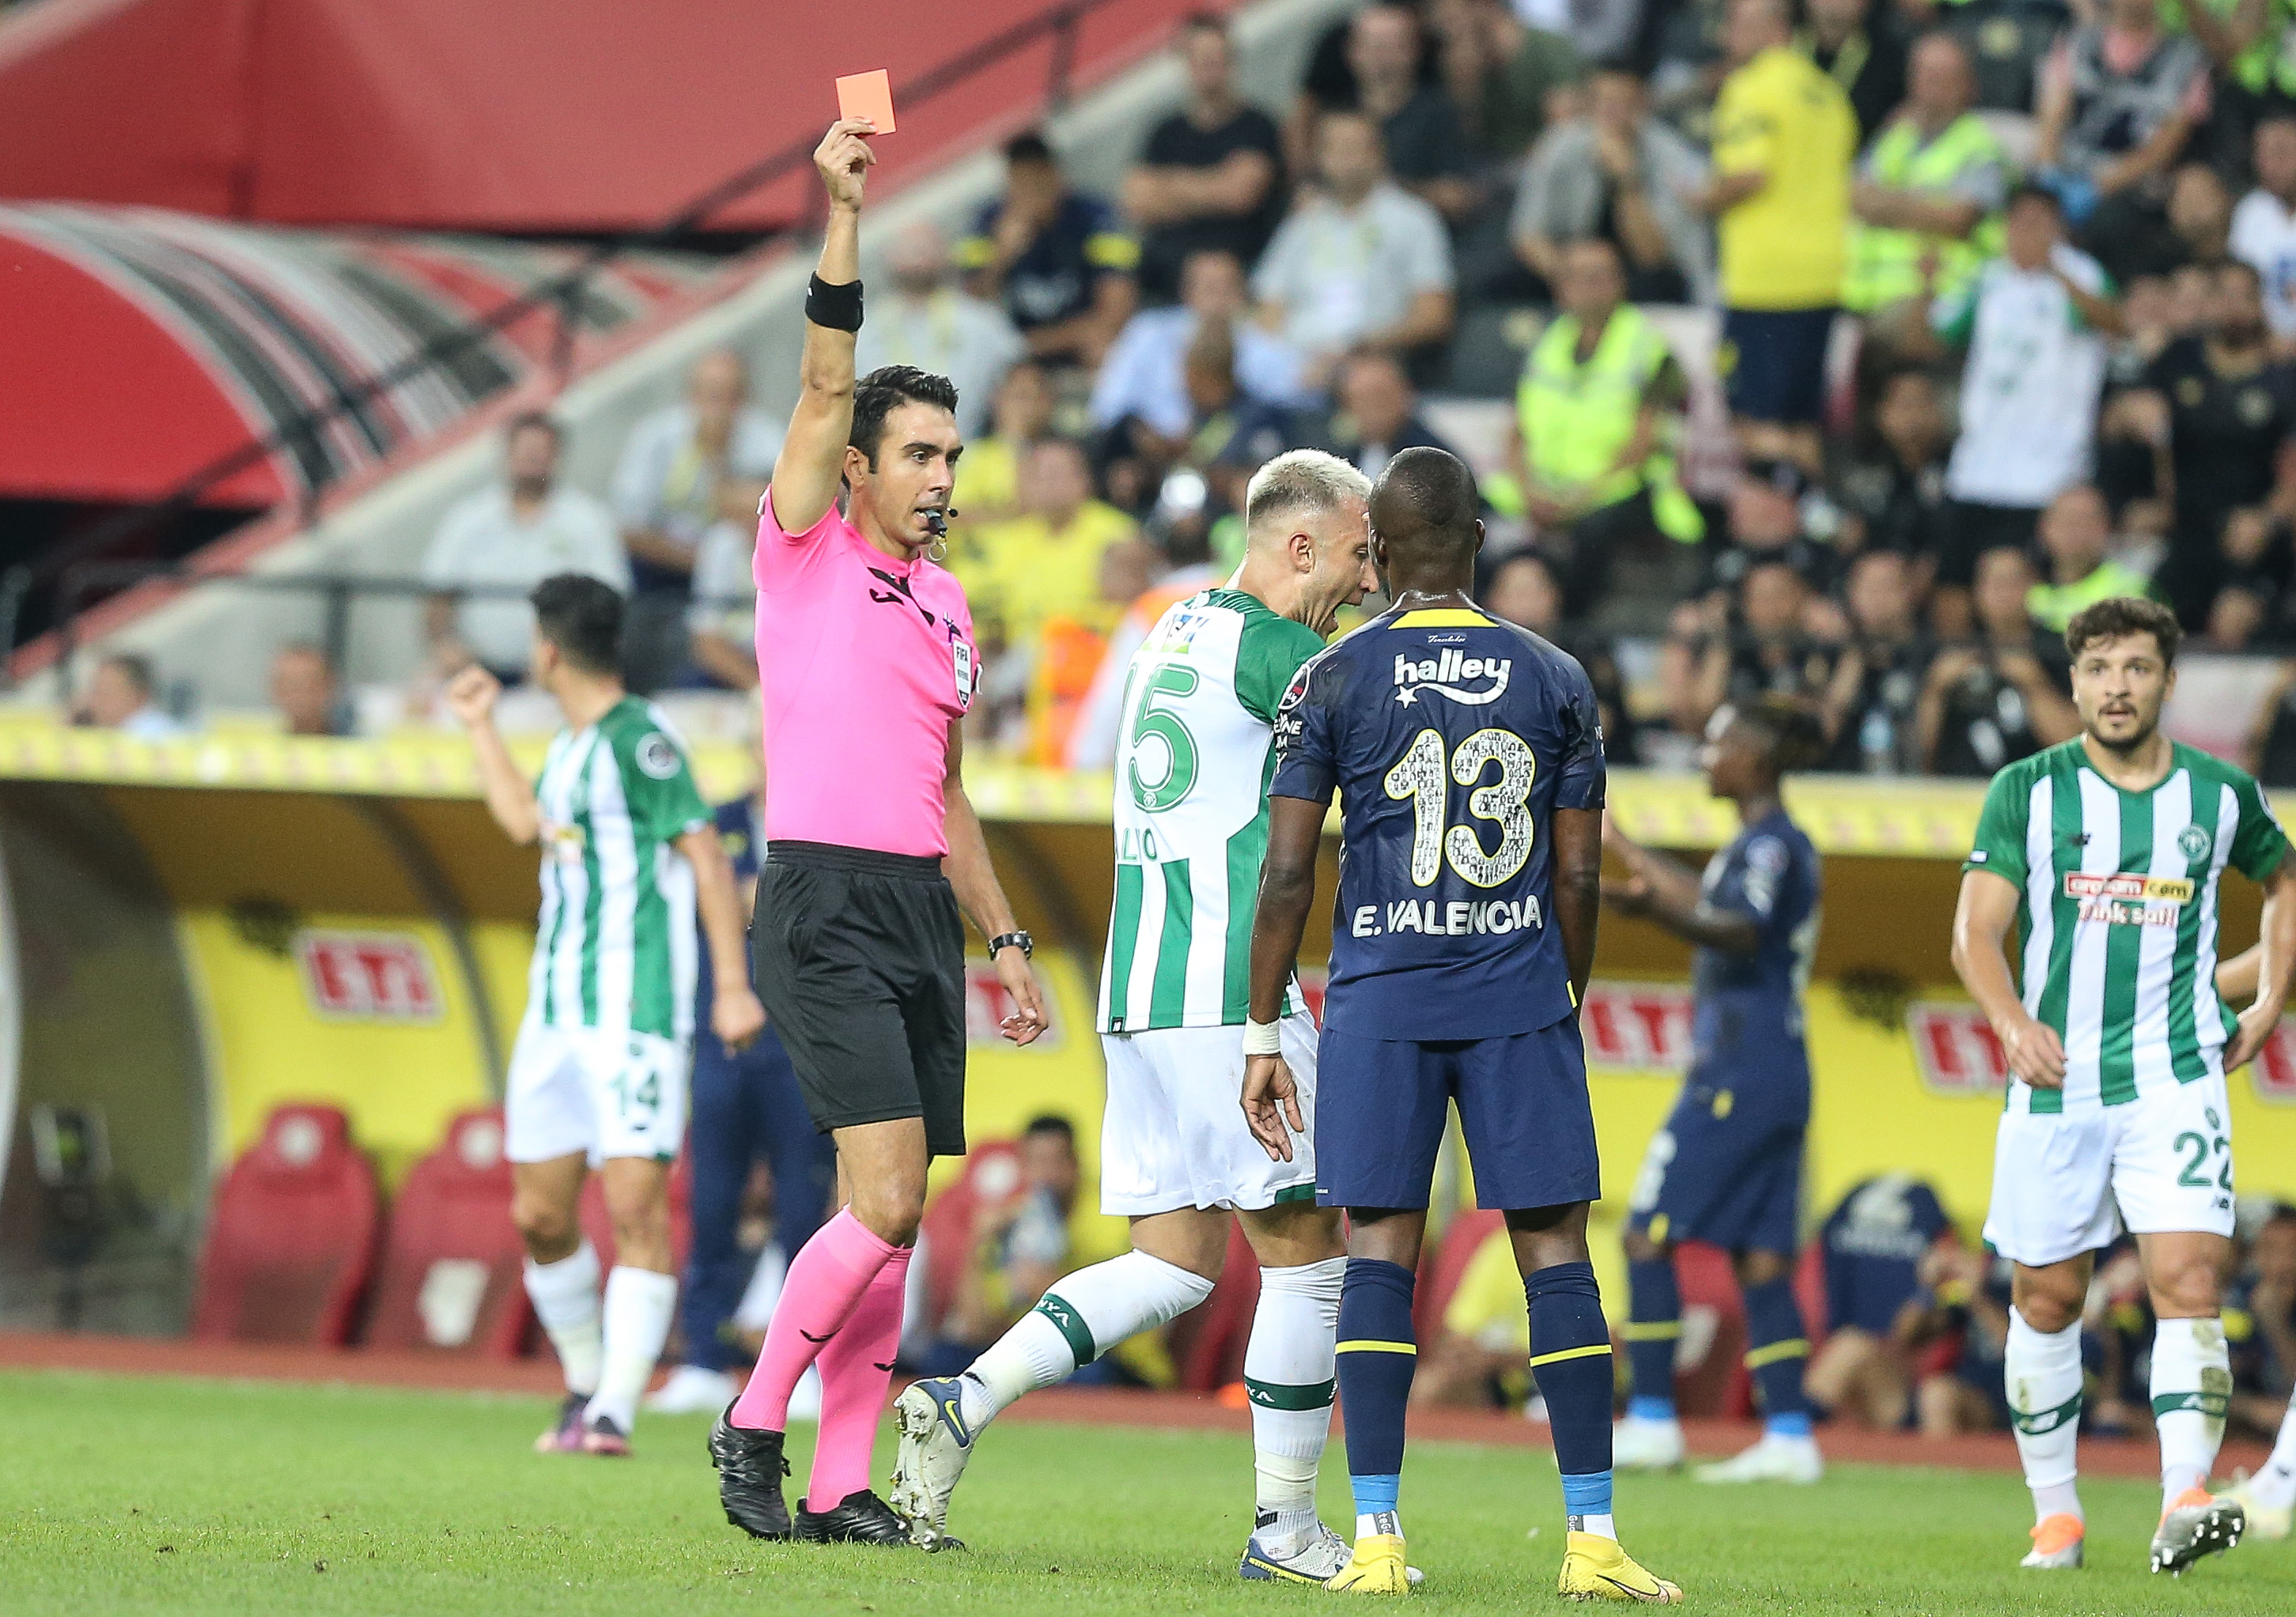 Antalyaspor vs Fenerbahçe: A Clash of Turkish Football Titans